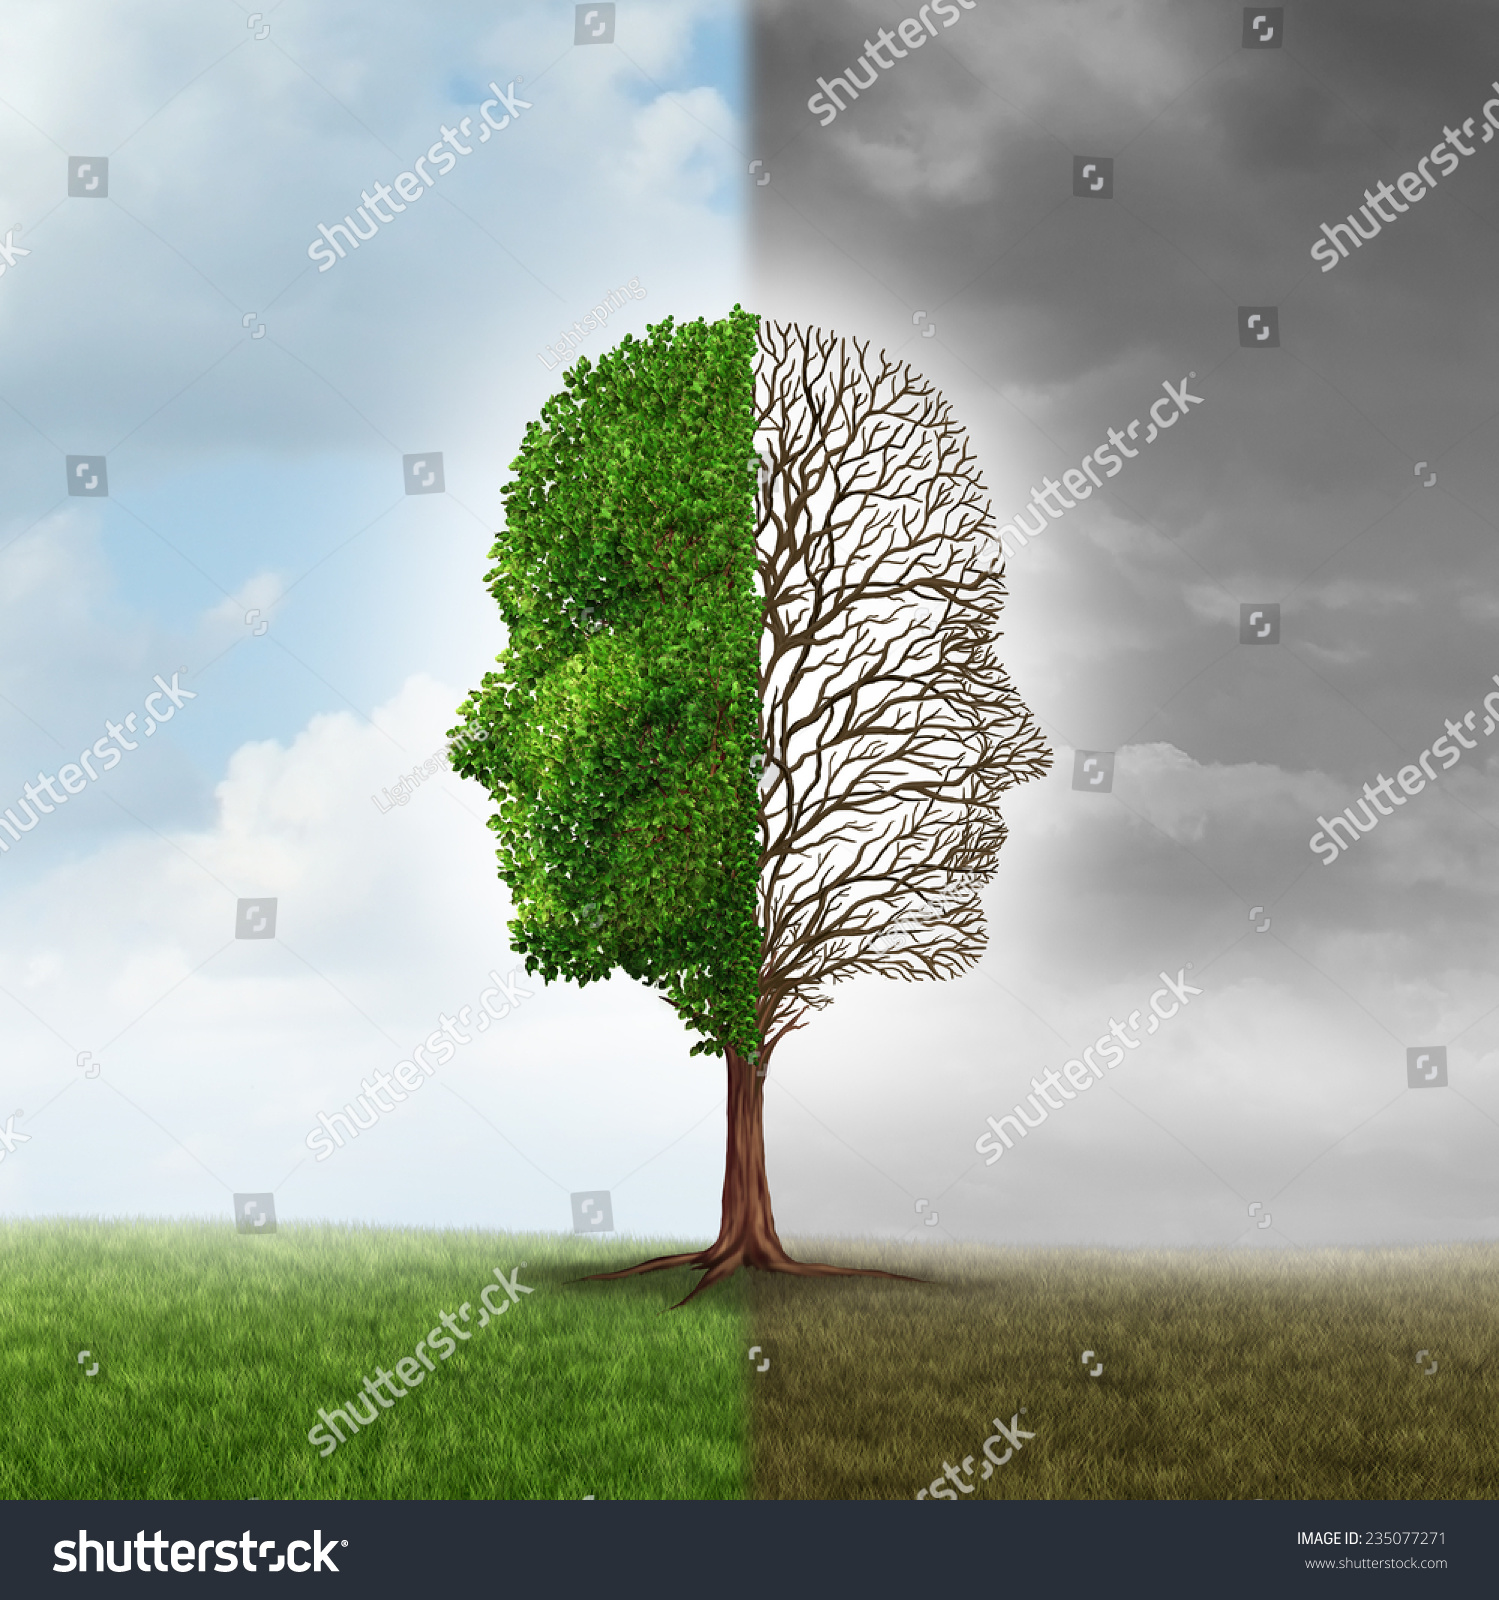 Human Emotion Mood Disorder Tree Shaped Stock Illustration 235077271 ...